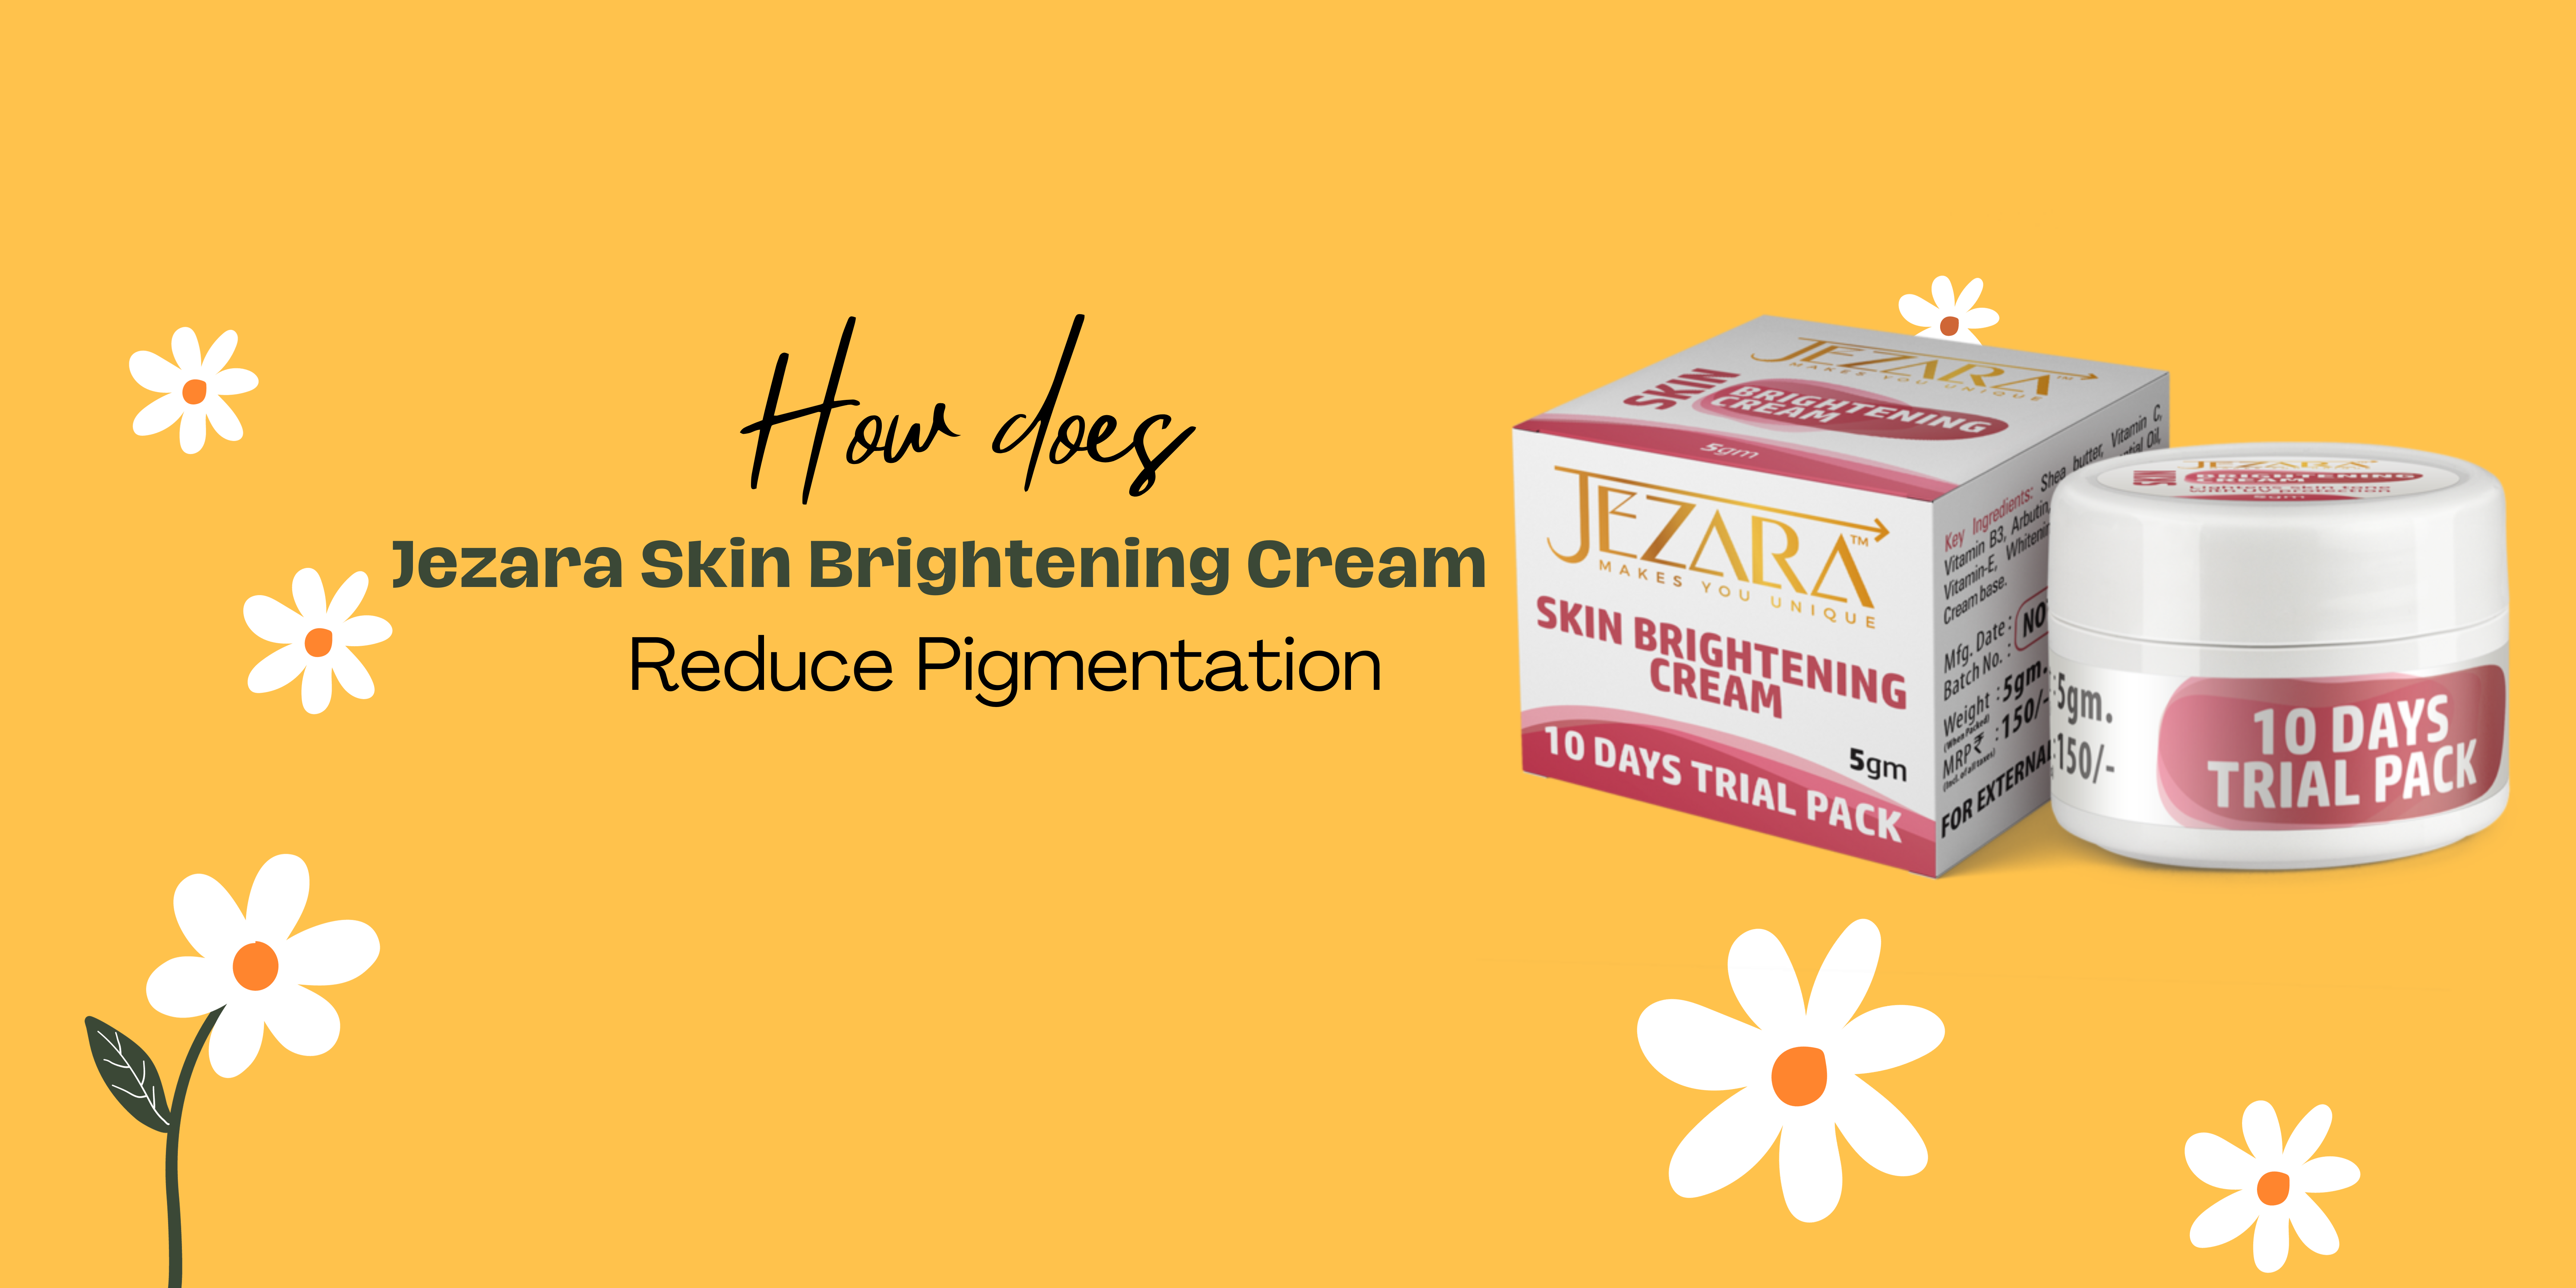 How does Jezara Skin Brightening Cream Reduce Pigmentation